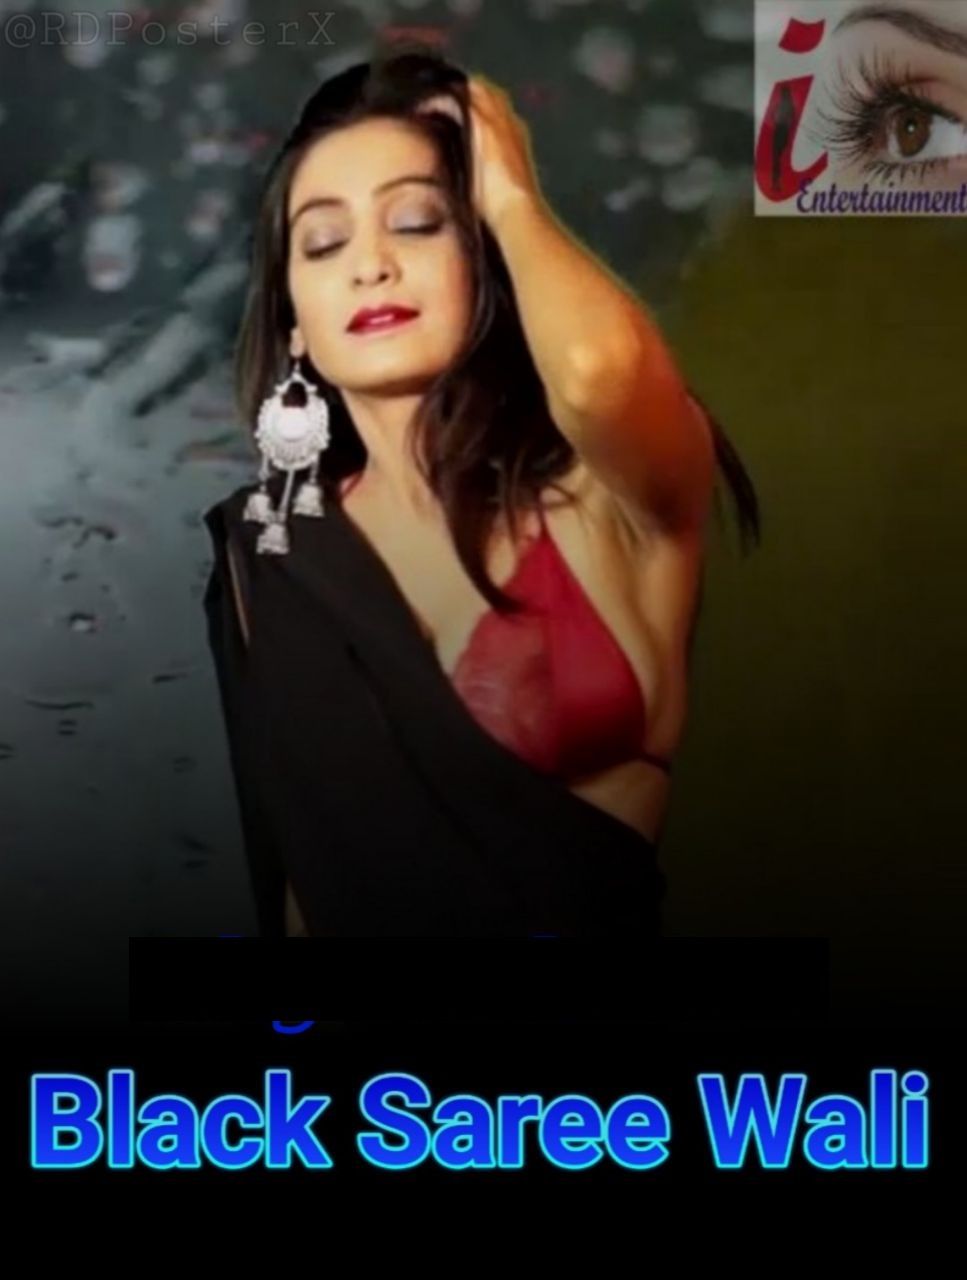 Black Saree Wali (2020) I Entertainment Exclusive (2020)